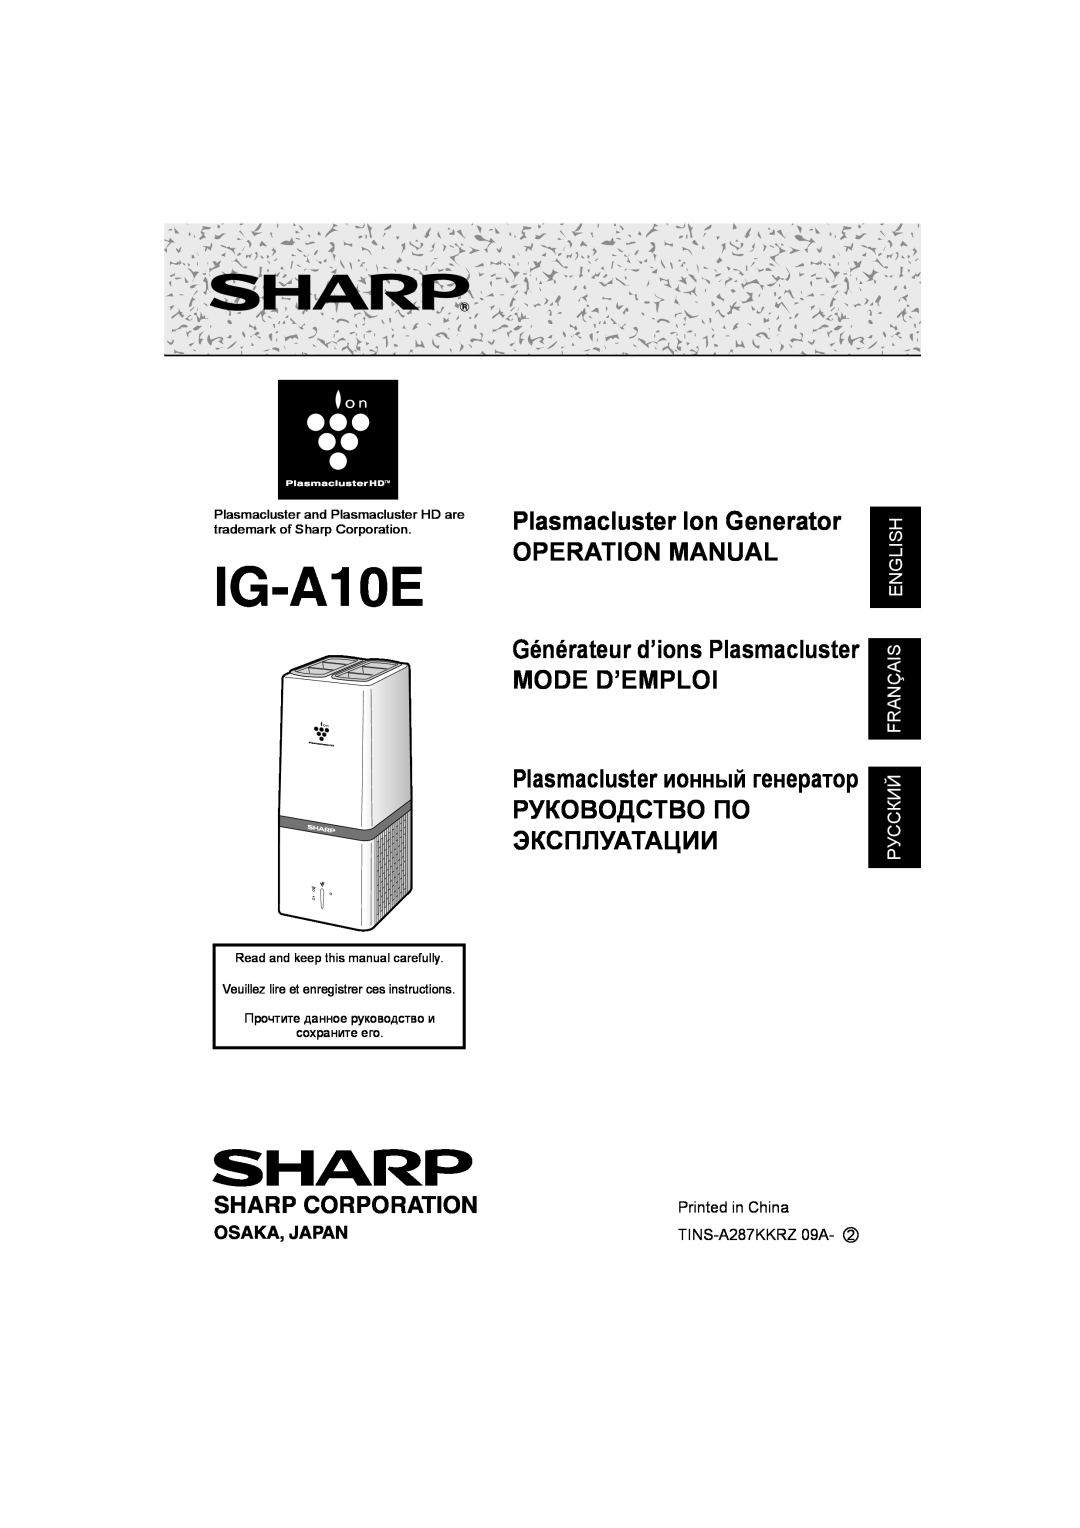 Sharp IG-A10E operation manual Mode D’Emploi, Эксплуатации, Руководство По, Plasmacluster Ion Generator, Sharp Corporation 